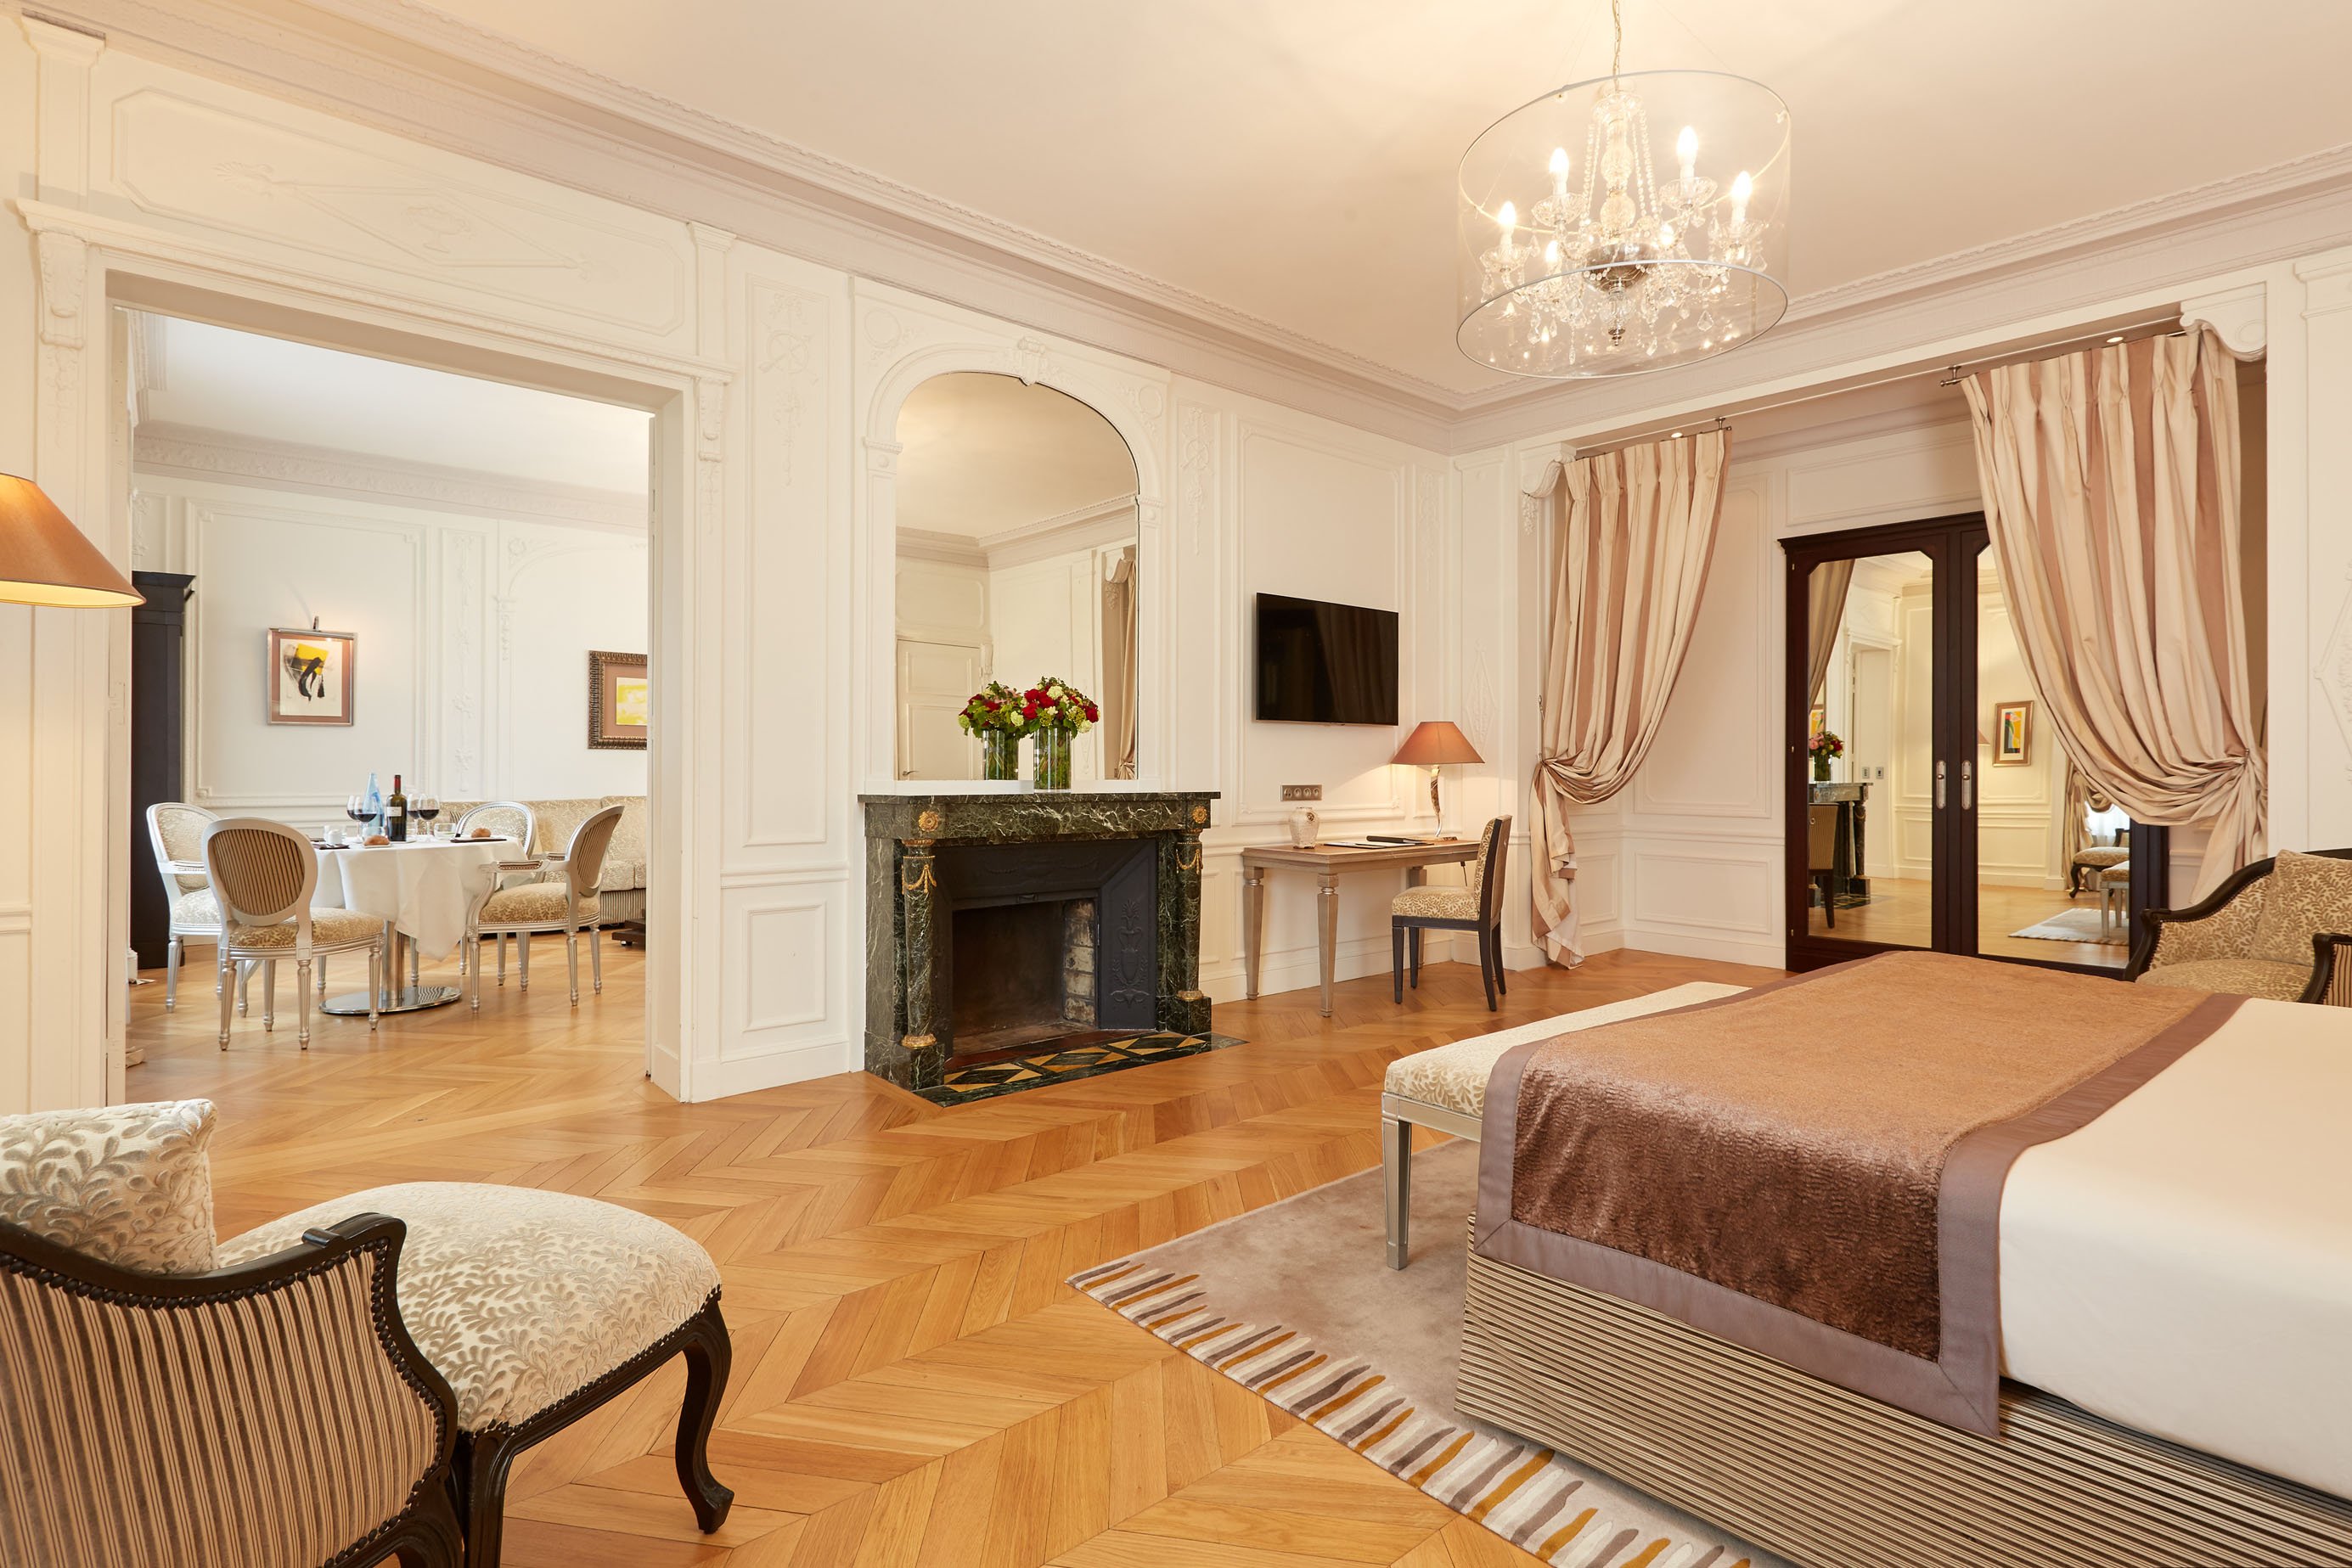 260/Suites/Suite prestige/Suite Prestige 2 - Bedroom 3 -BedCMajestic Hotel-Spa_1.jpg